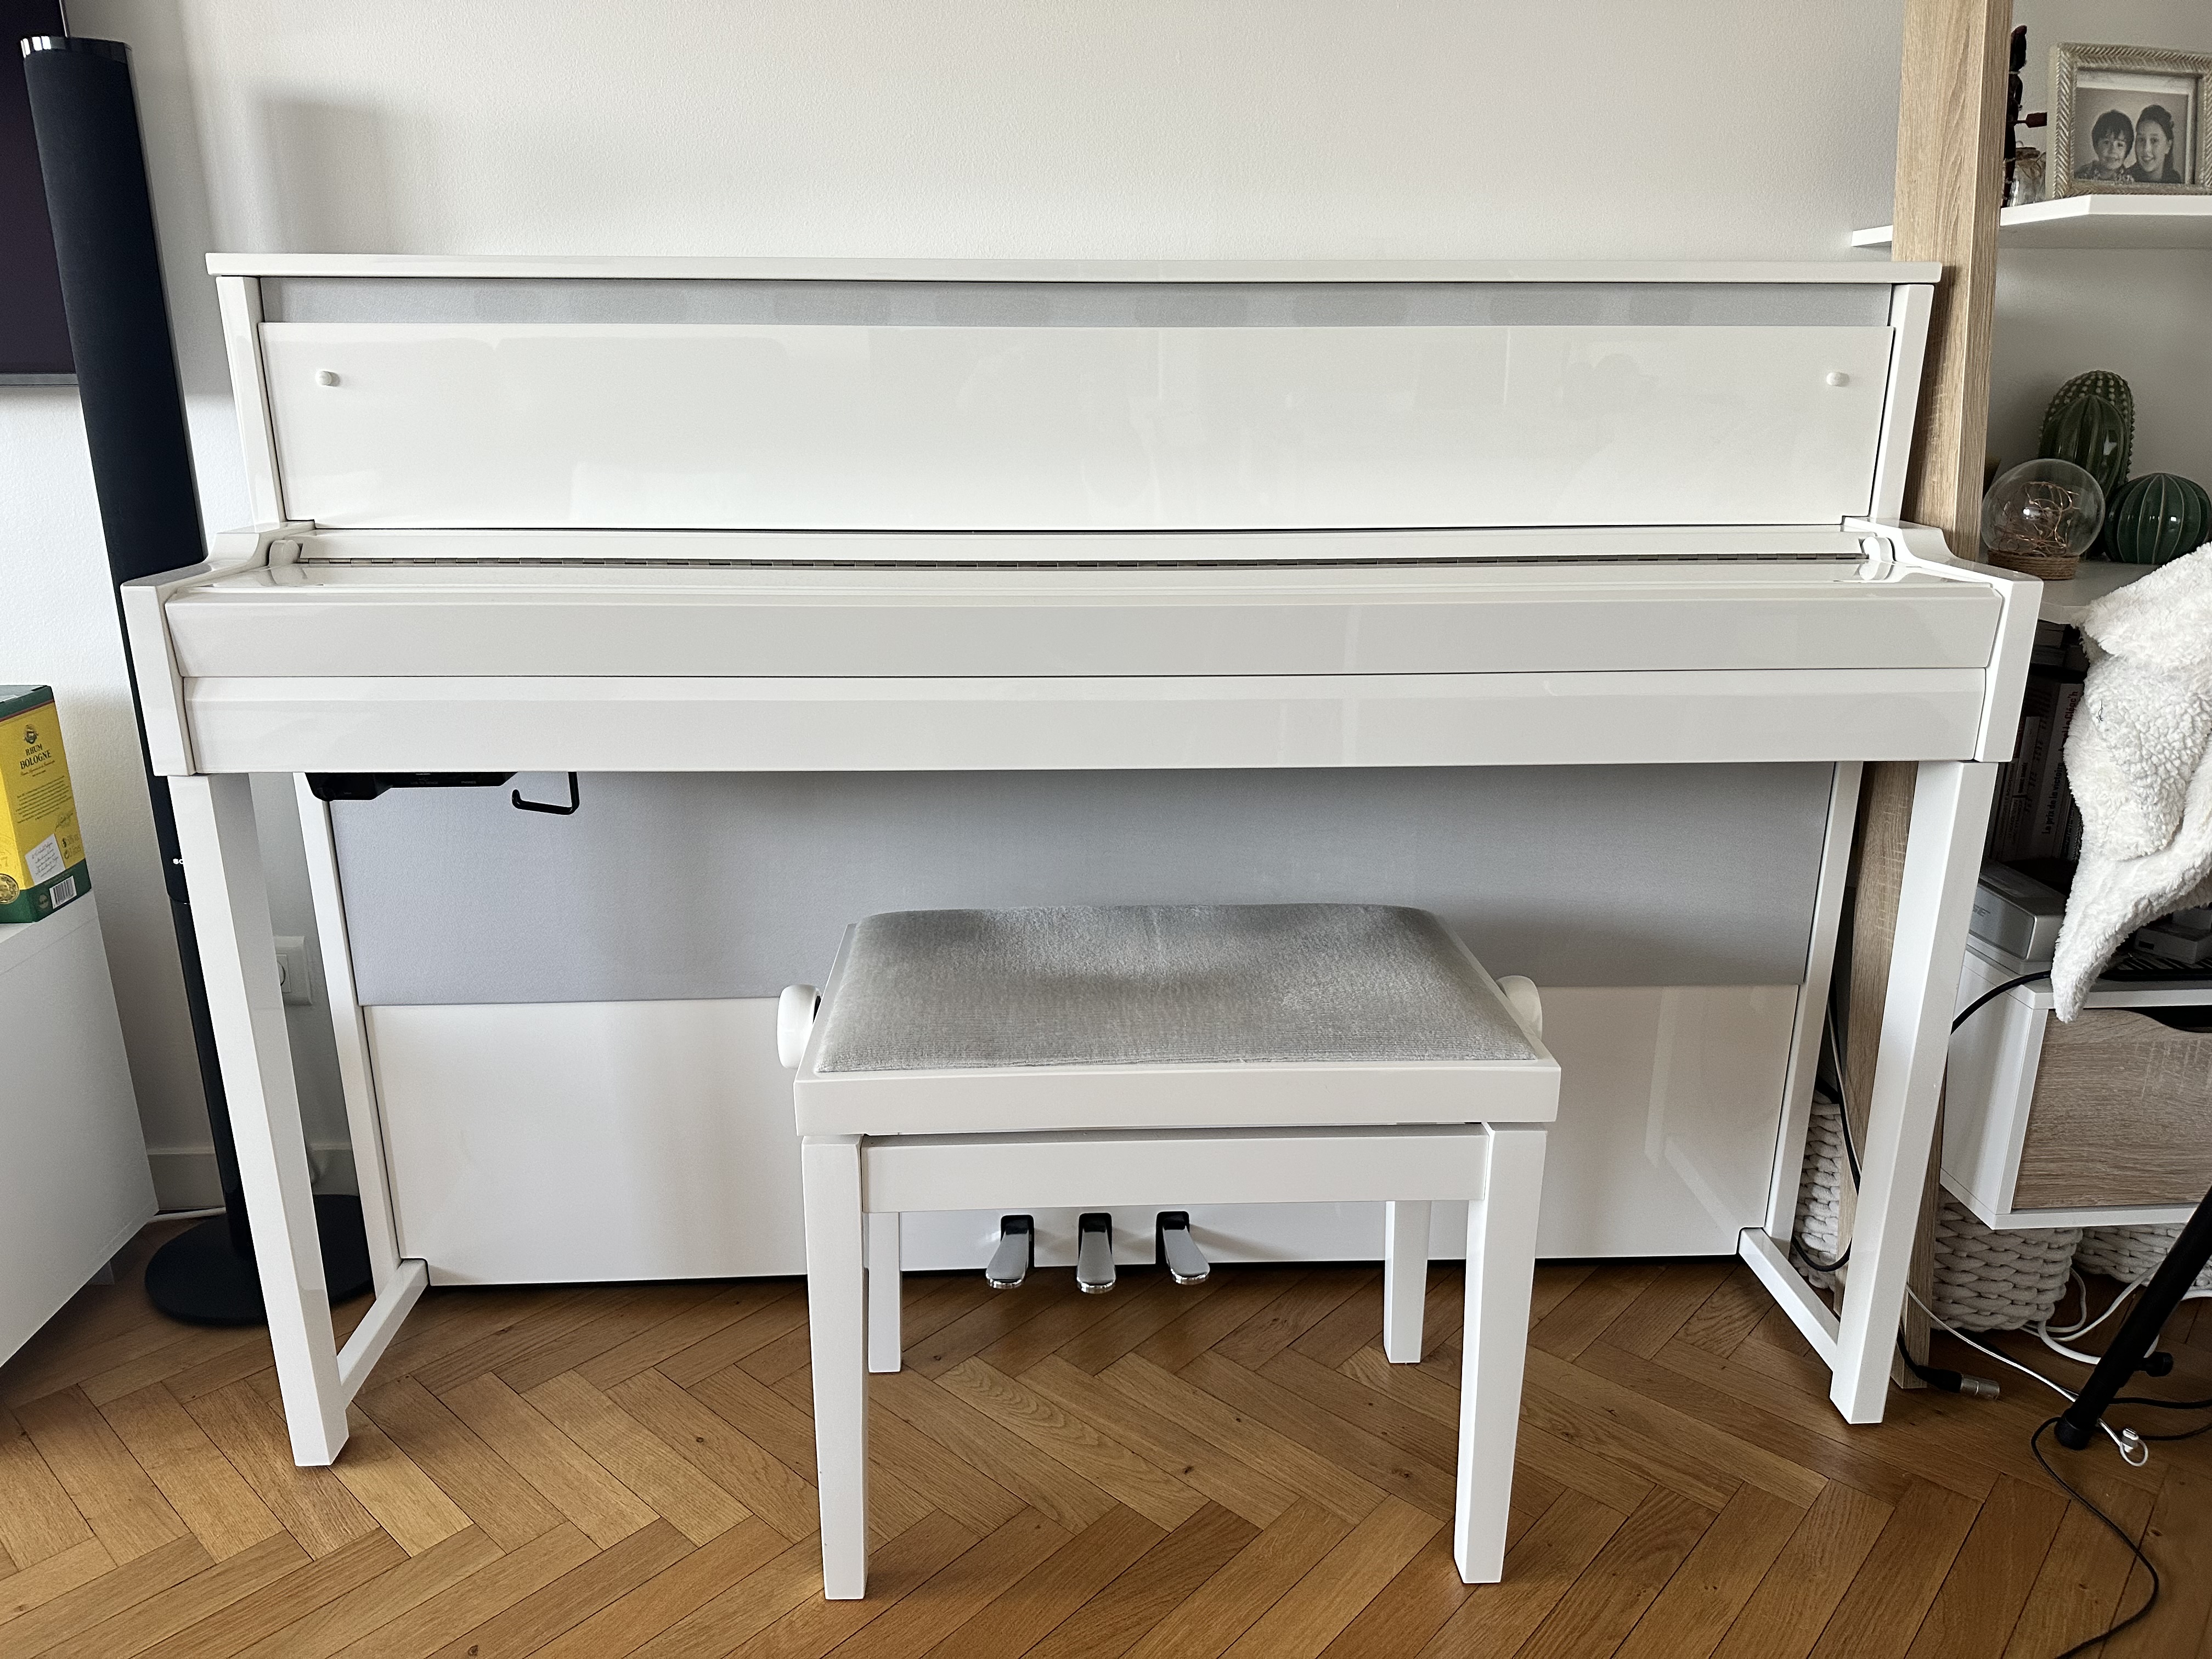 Piano numérique hybride Yamaha NU1XA AvantGrand - Paris